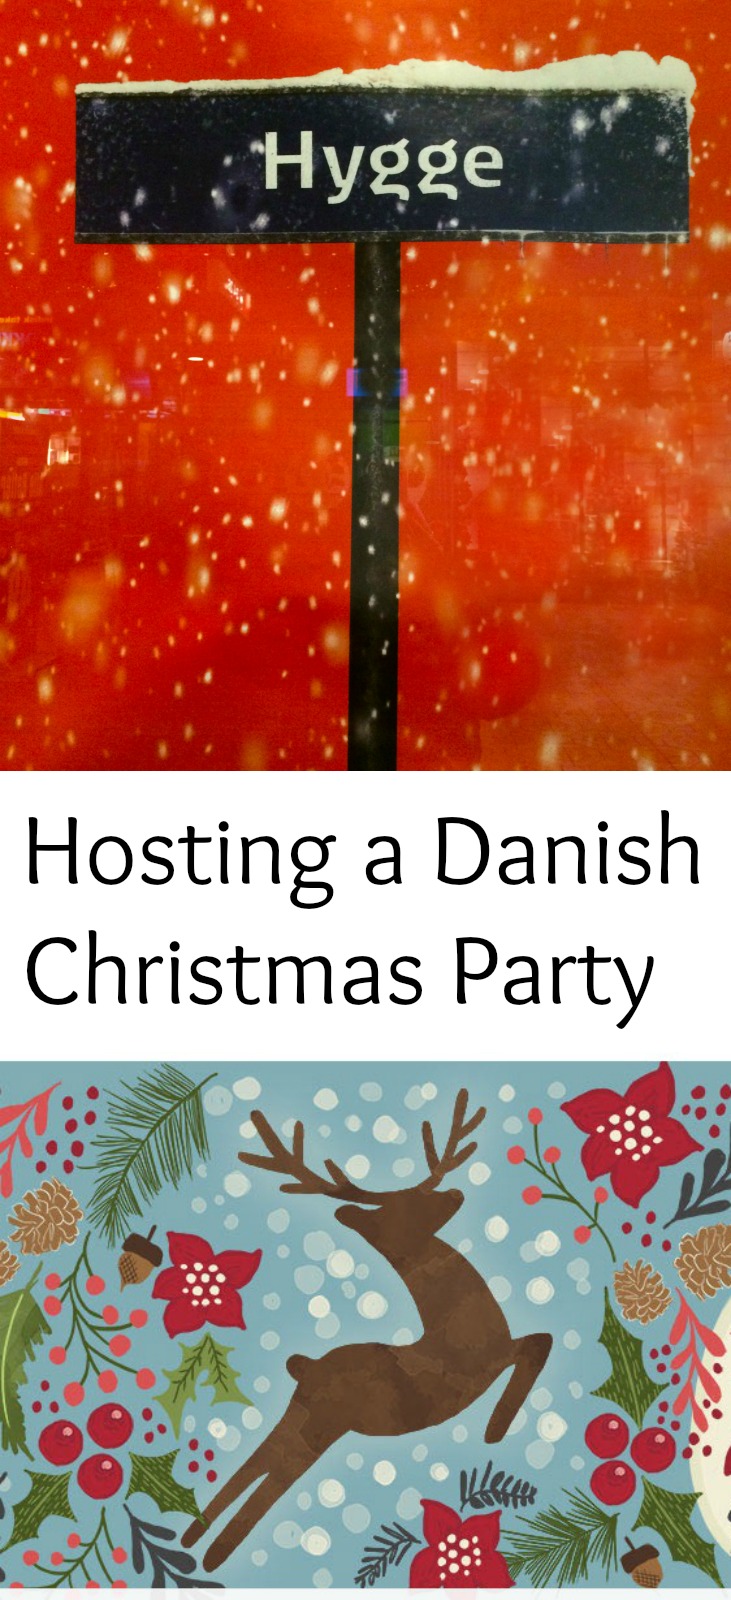 Hosting a Danish Christmas Party is so easy with @Evite Glædelig Jul! #LifesBetterTogether #BeThere #Evite